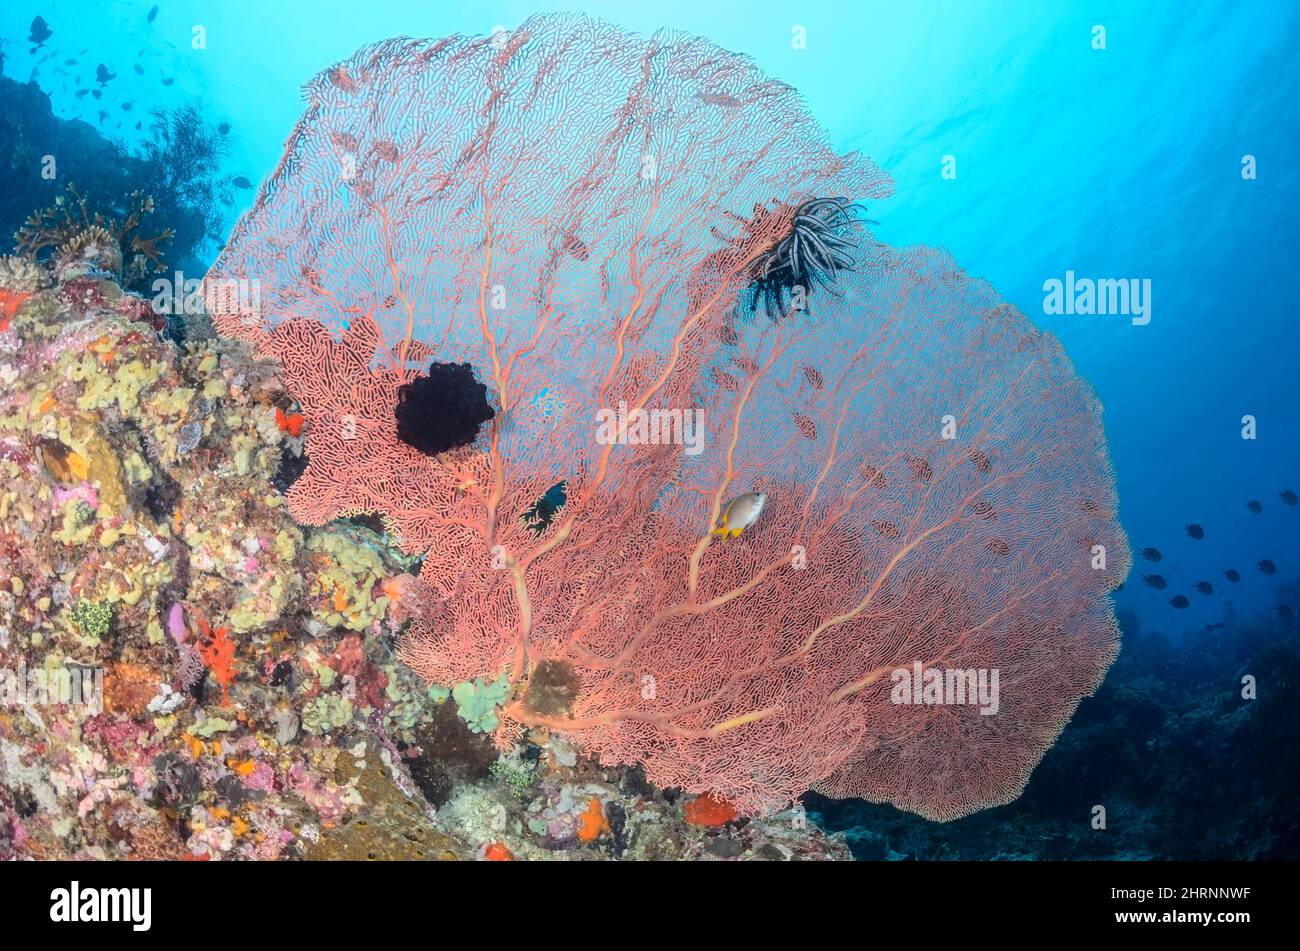 Sea fan, Melithaea sp., Menjangan Island, Bali Barat Marine Park, Bali, Indonesia, Pacific Stock Photo